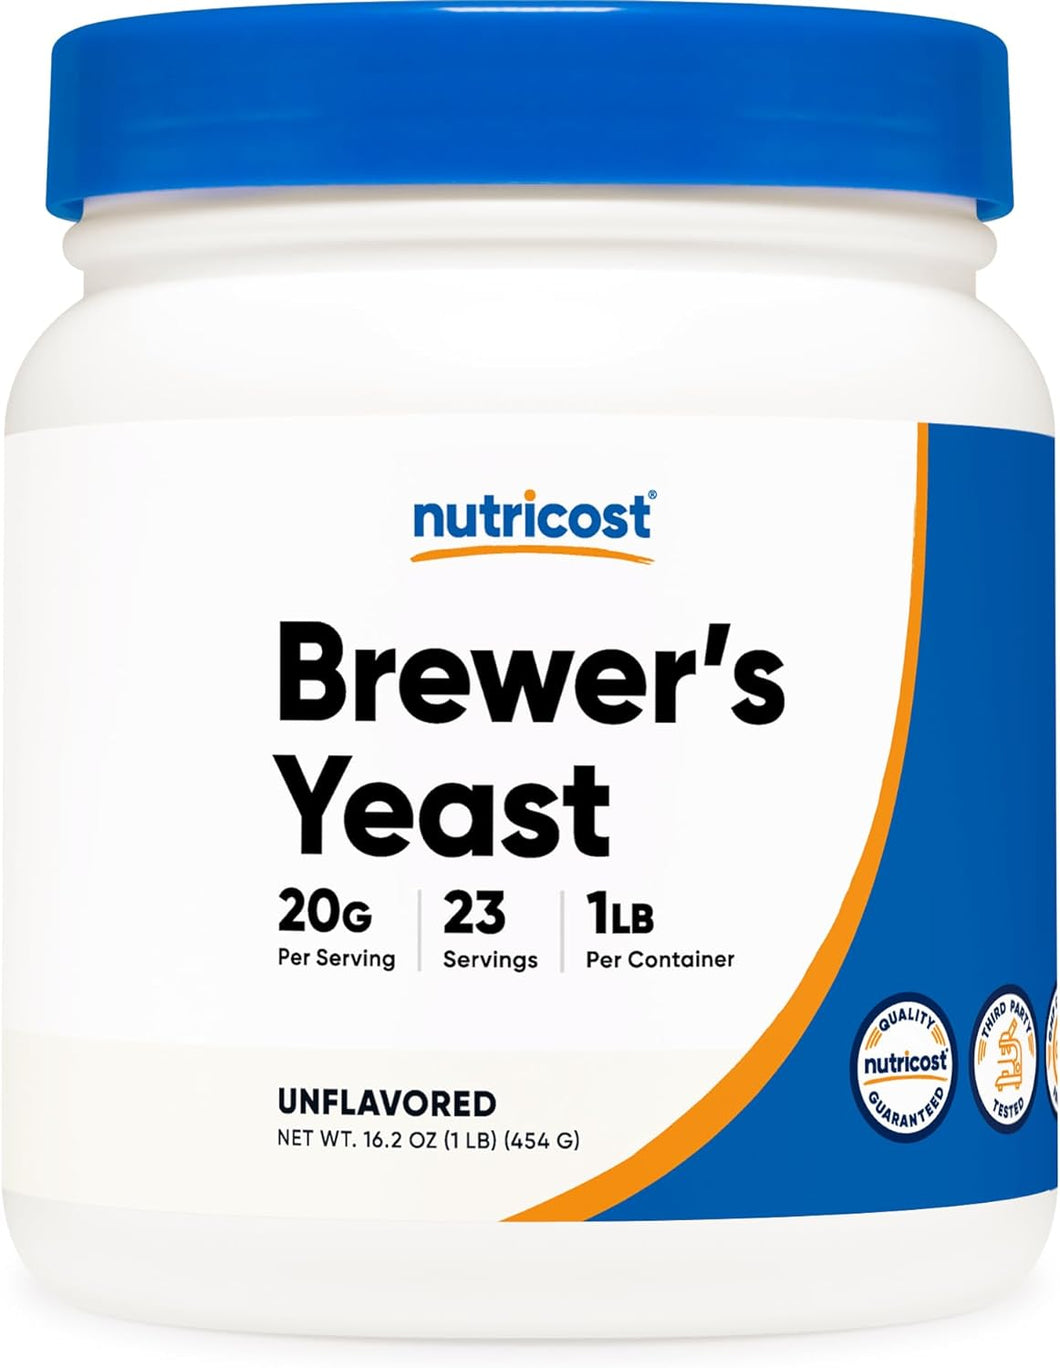 Nutricost Brewers Yeast Powder 1LB (16oz) - Non-GMO, Vegetarian Friendly